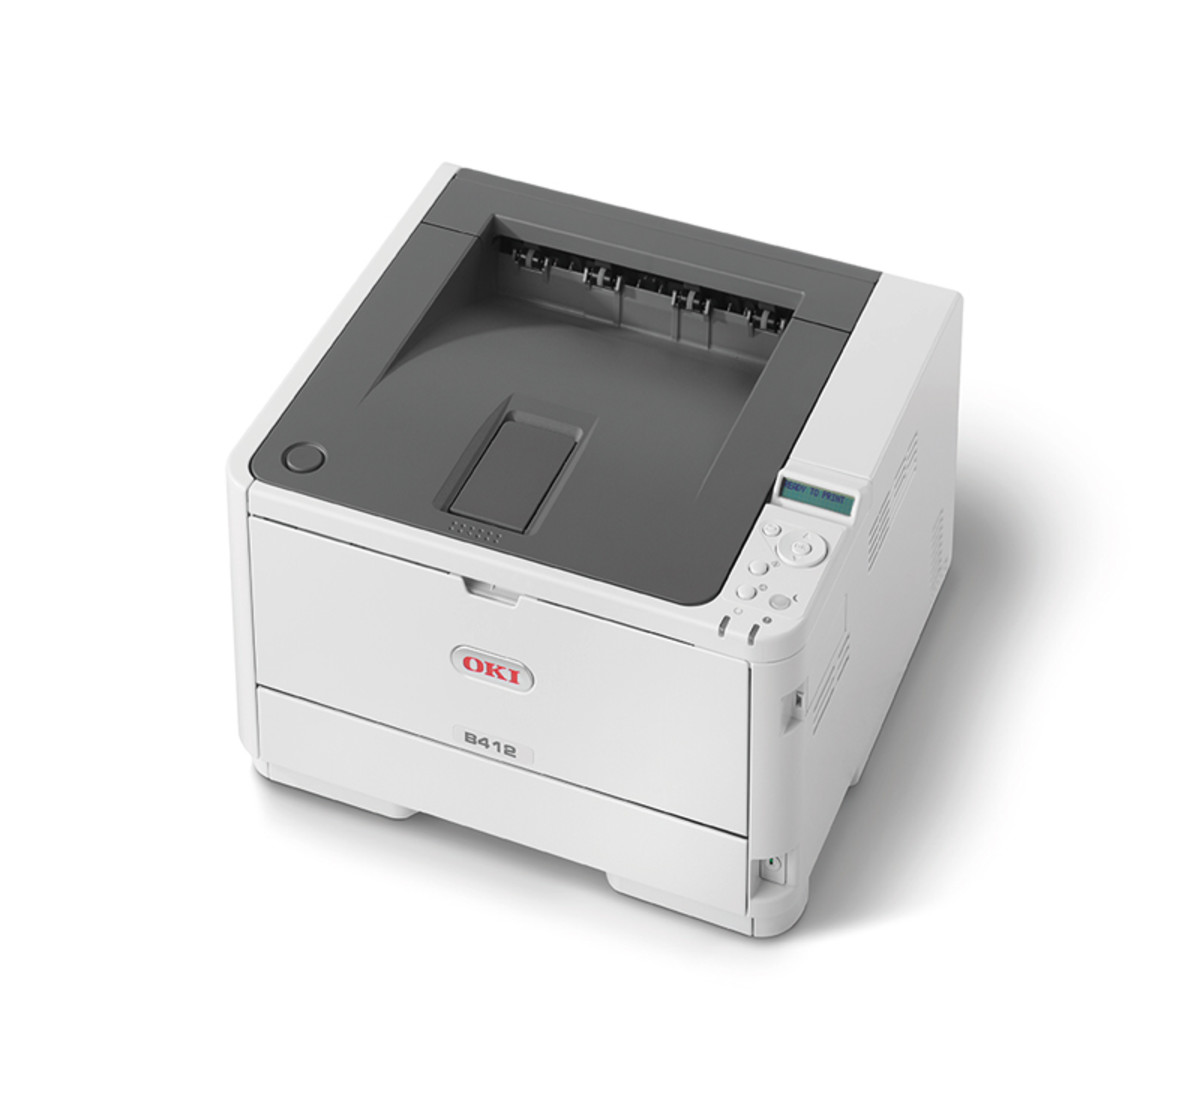 B412DN A4 Mono Laser Printer